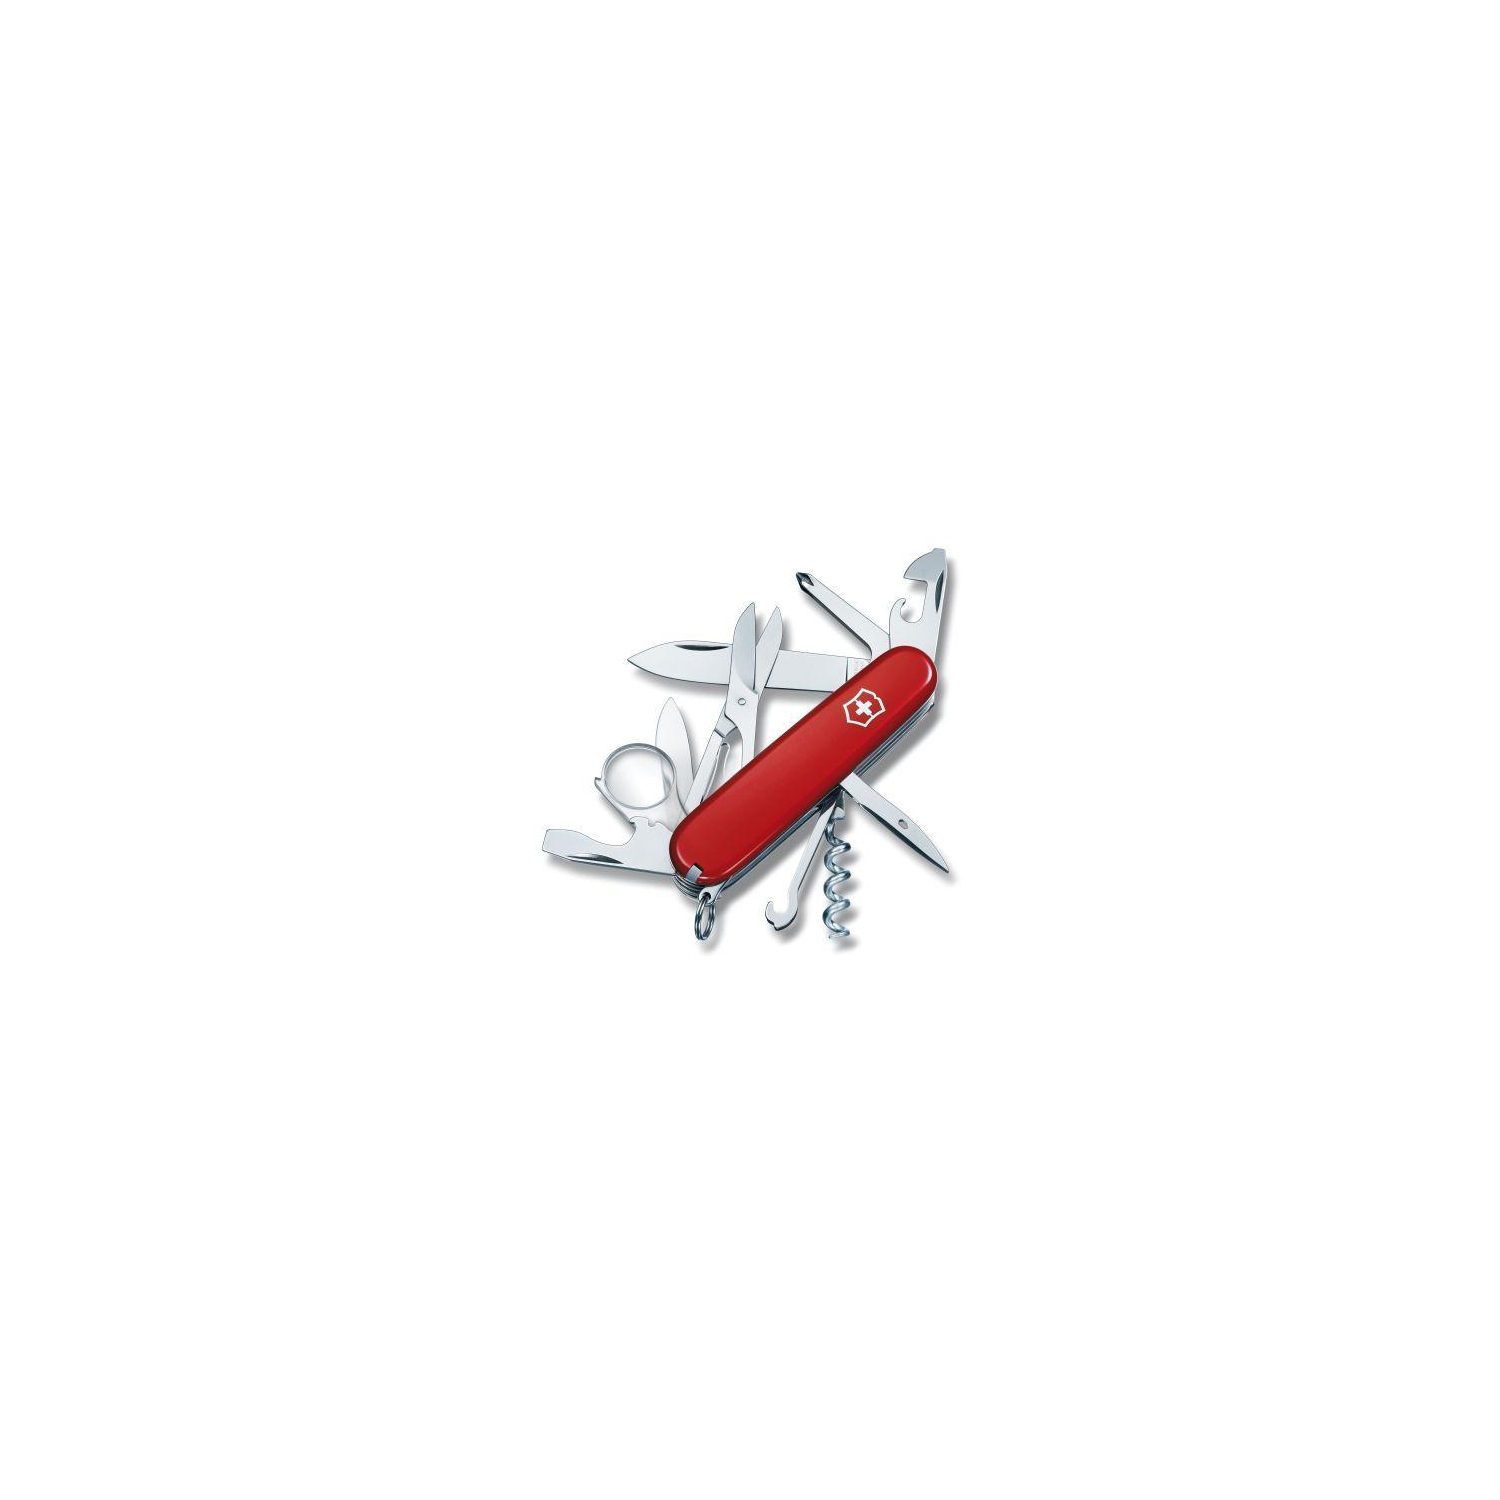 Victorinox Explorer (Red) Swiss Army Knife 1.6703-033-X1